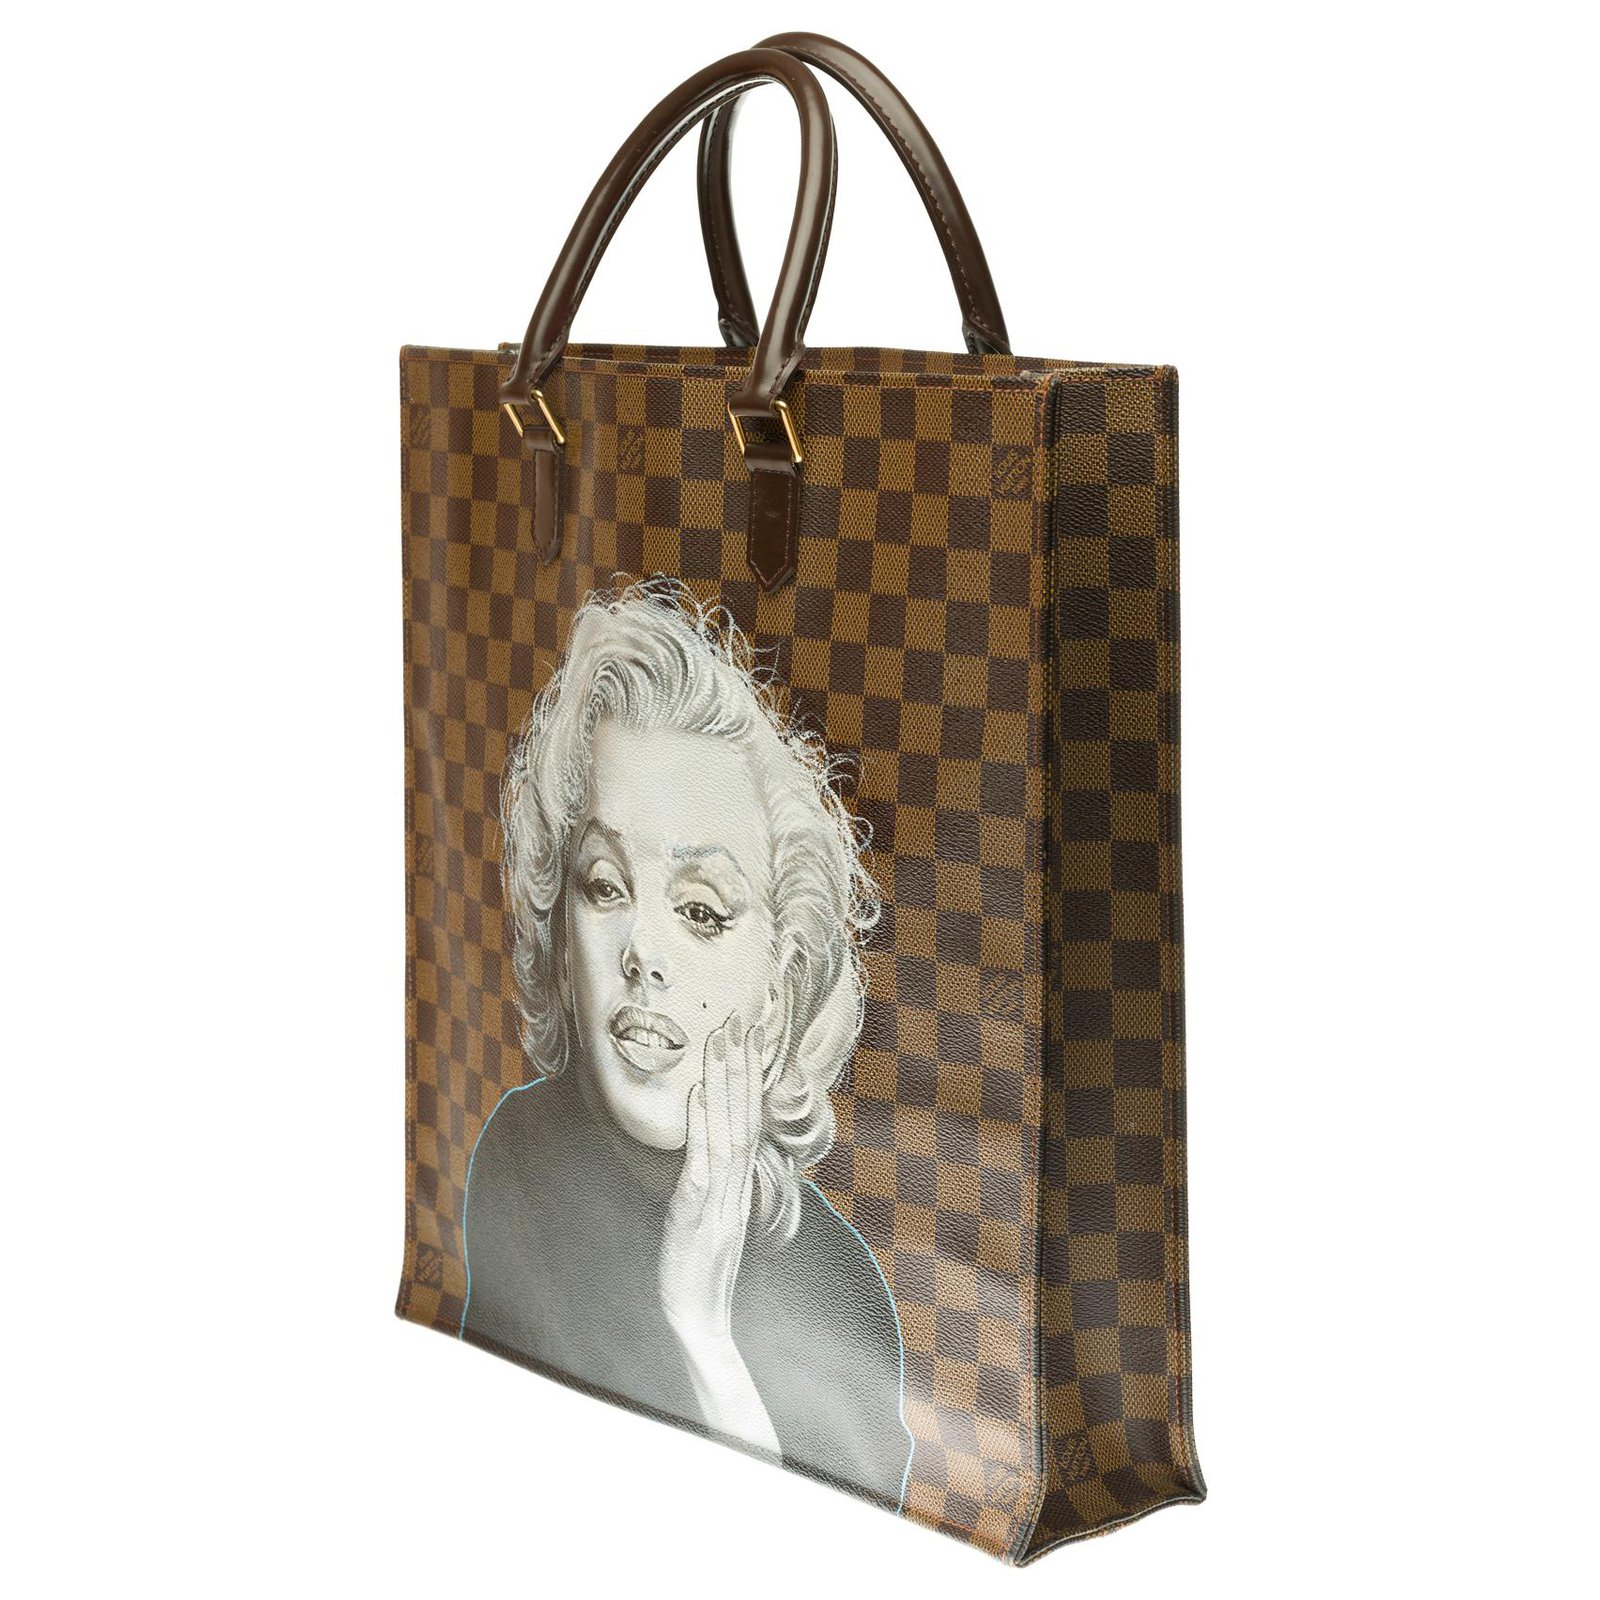 Splendid Louis Vuitton Plat handbag in ebony checkerboard